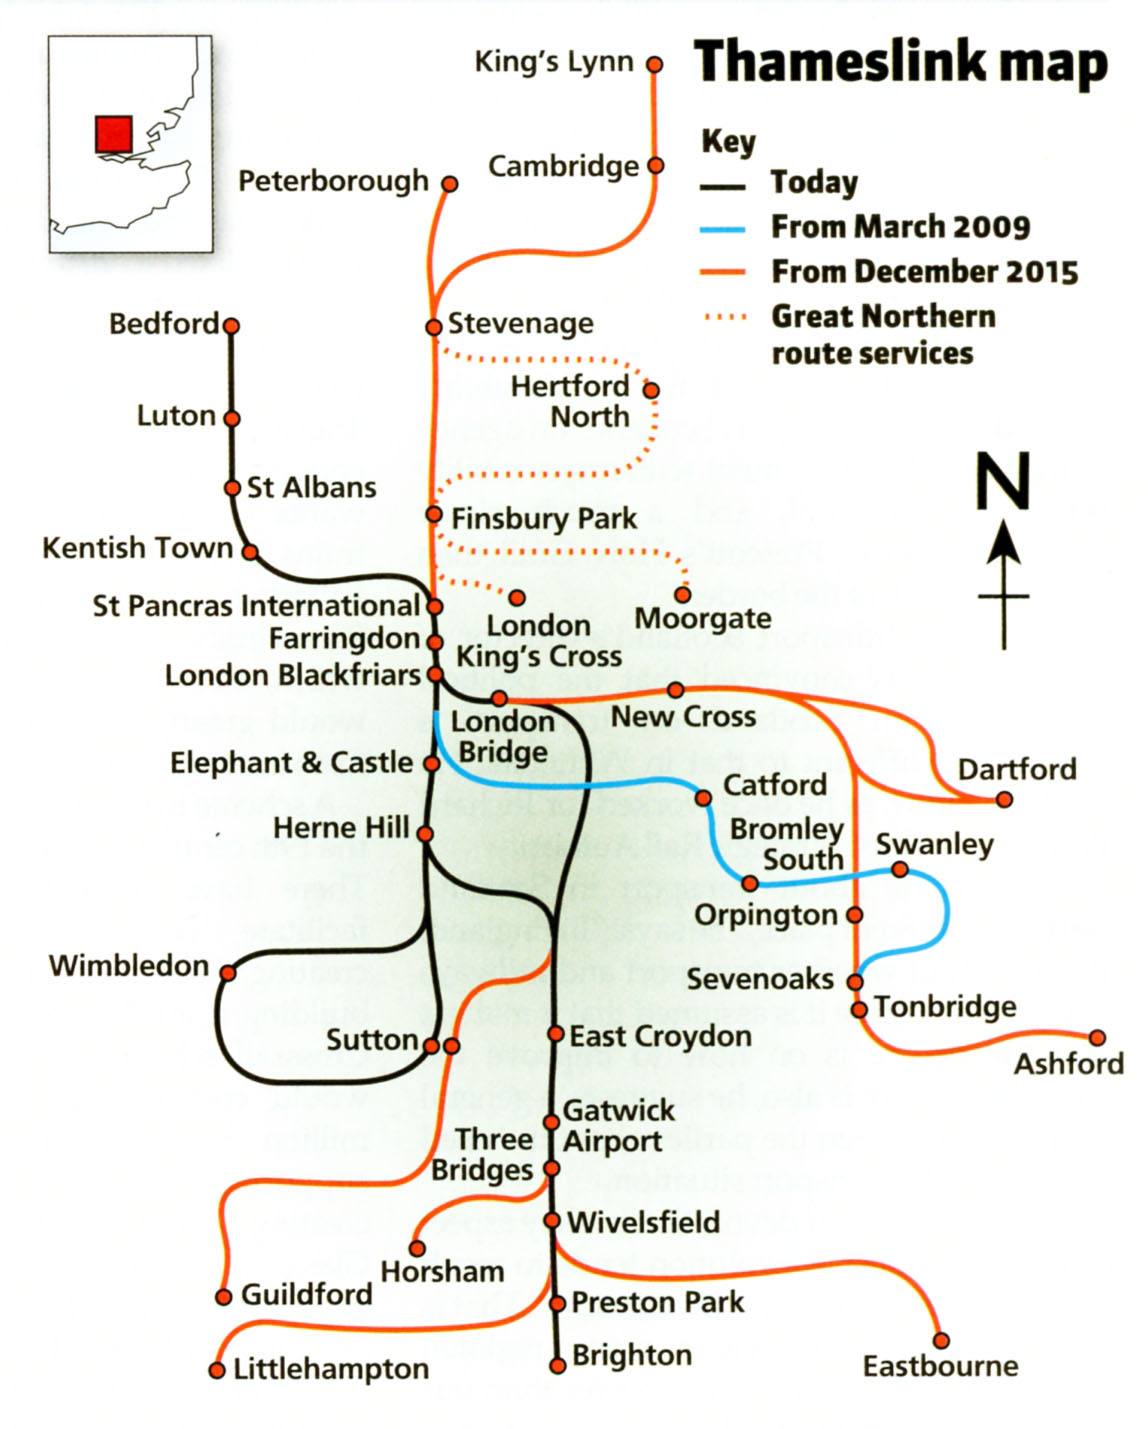 Thameslink train / rail maps